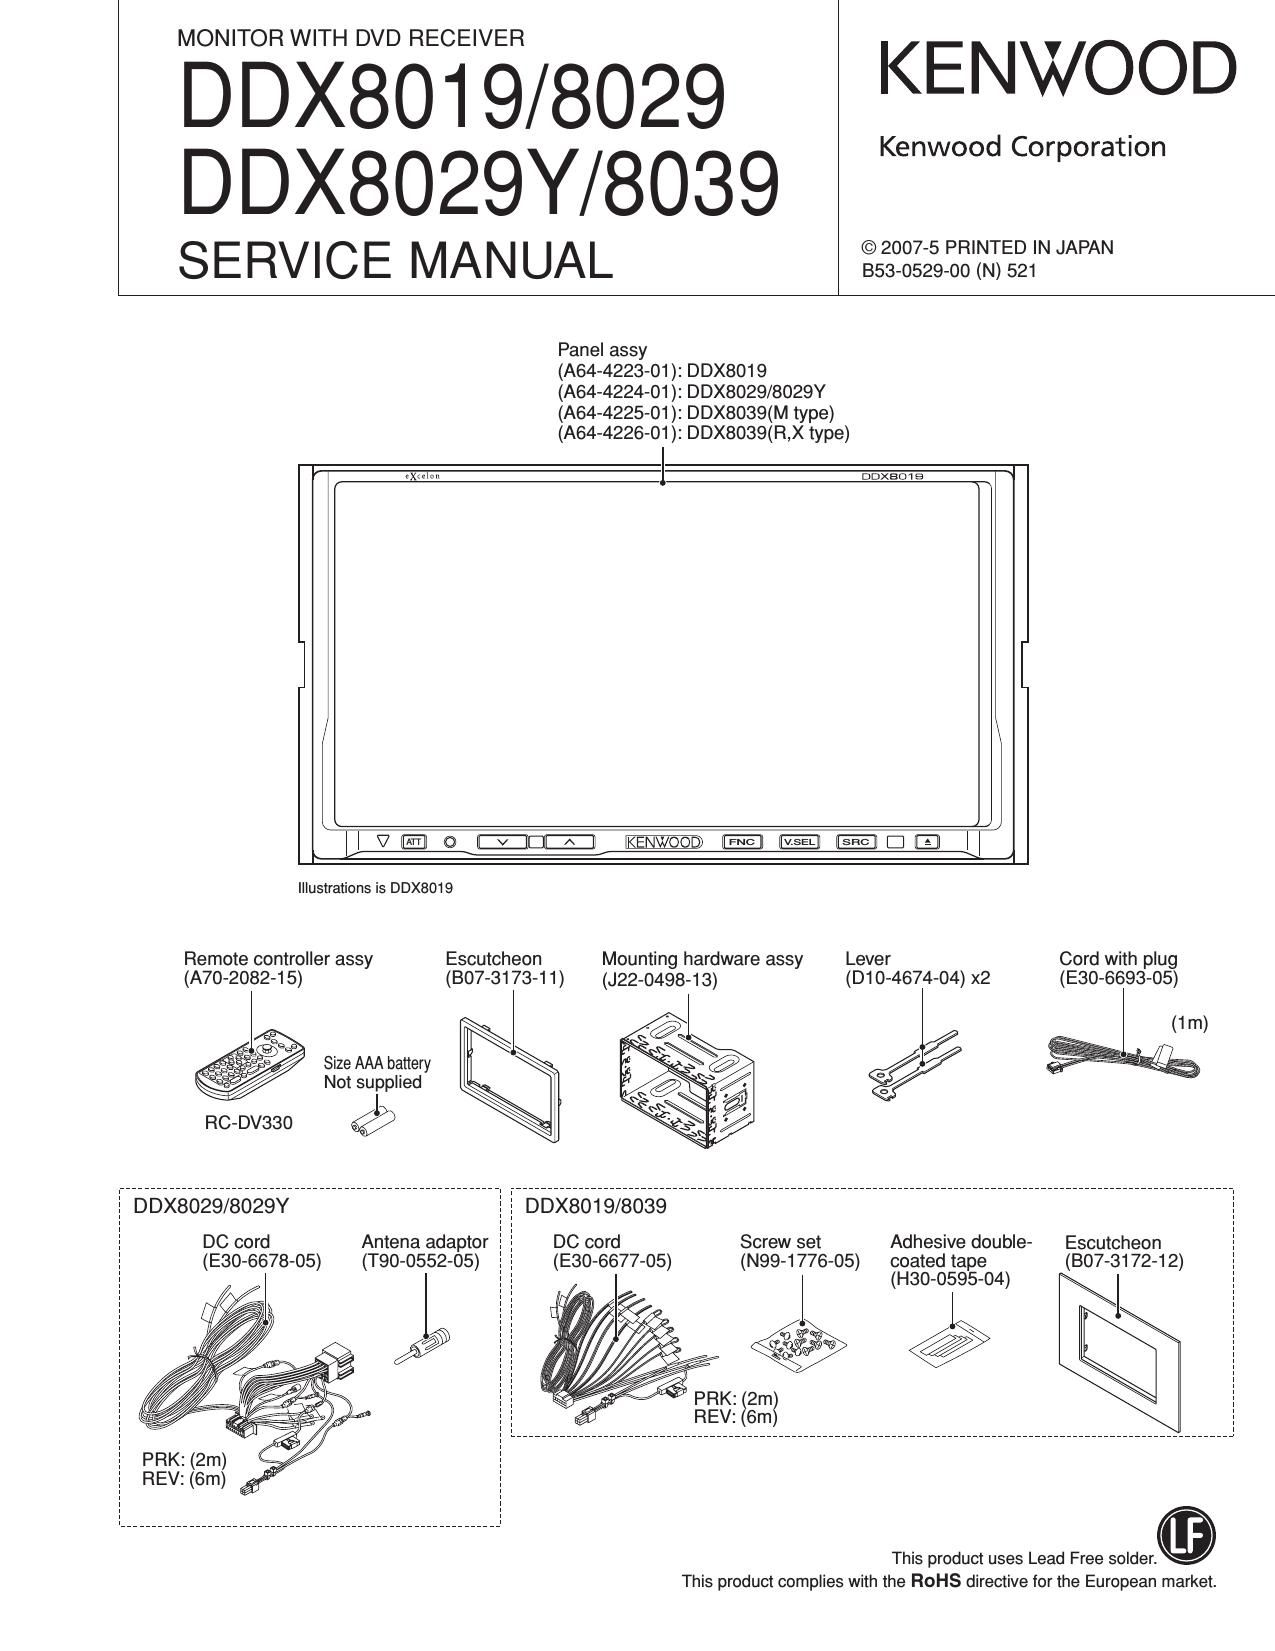 Kenwood DDX 8029 Y Service Manual